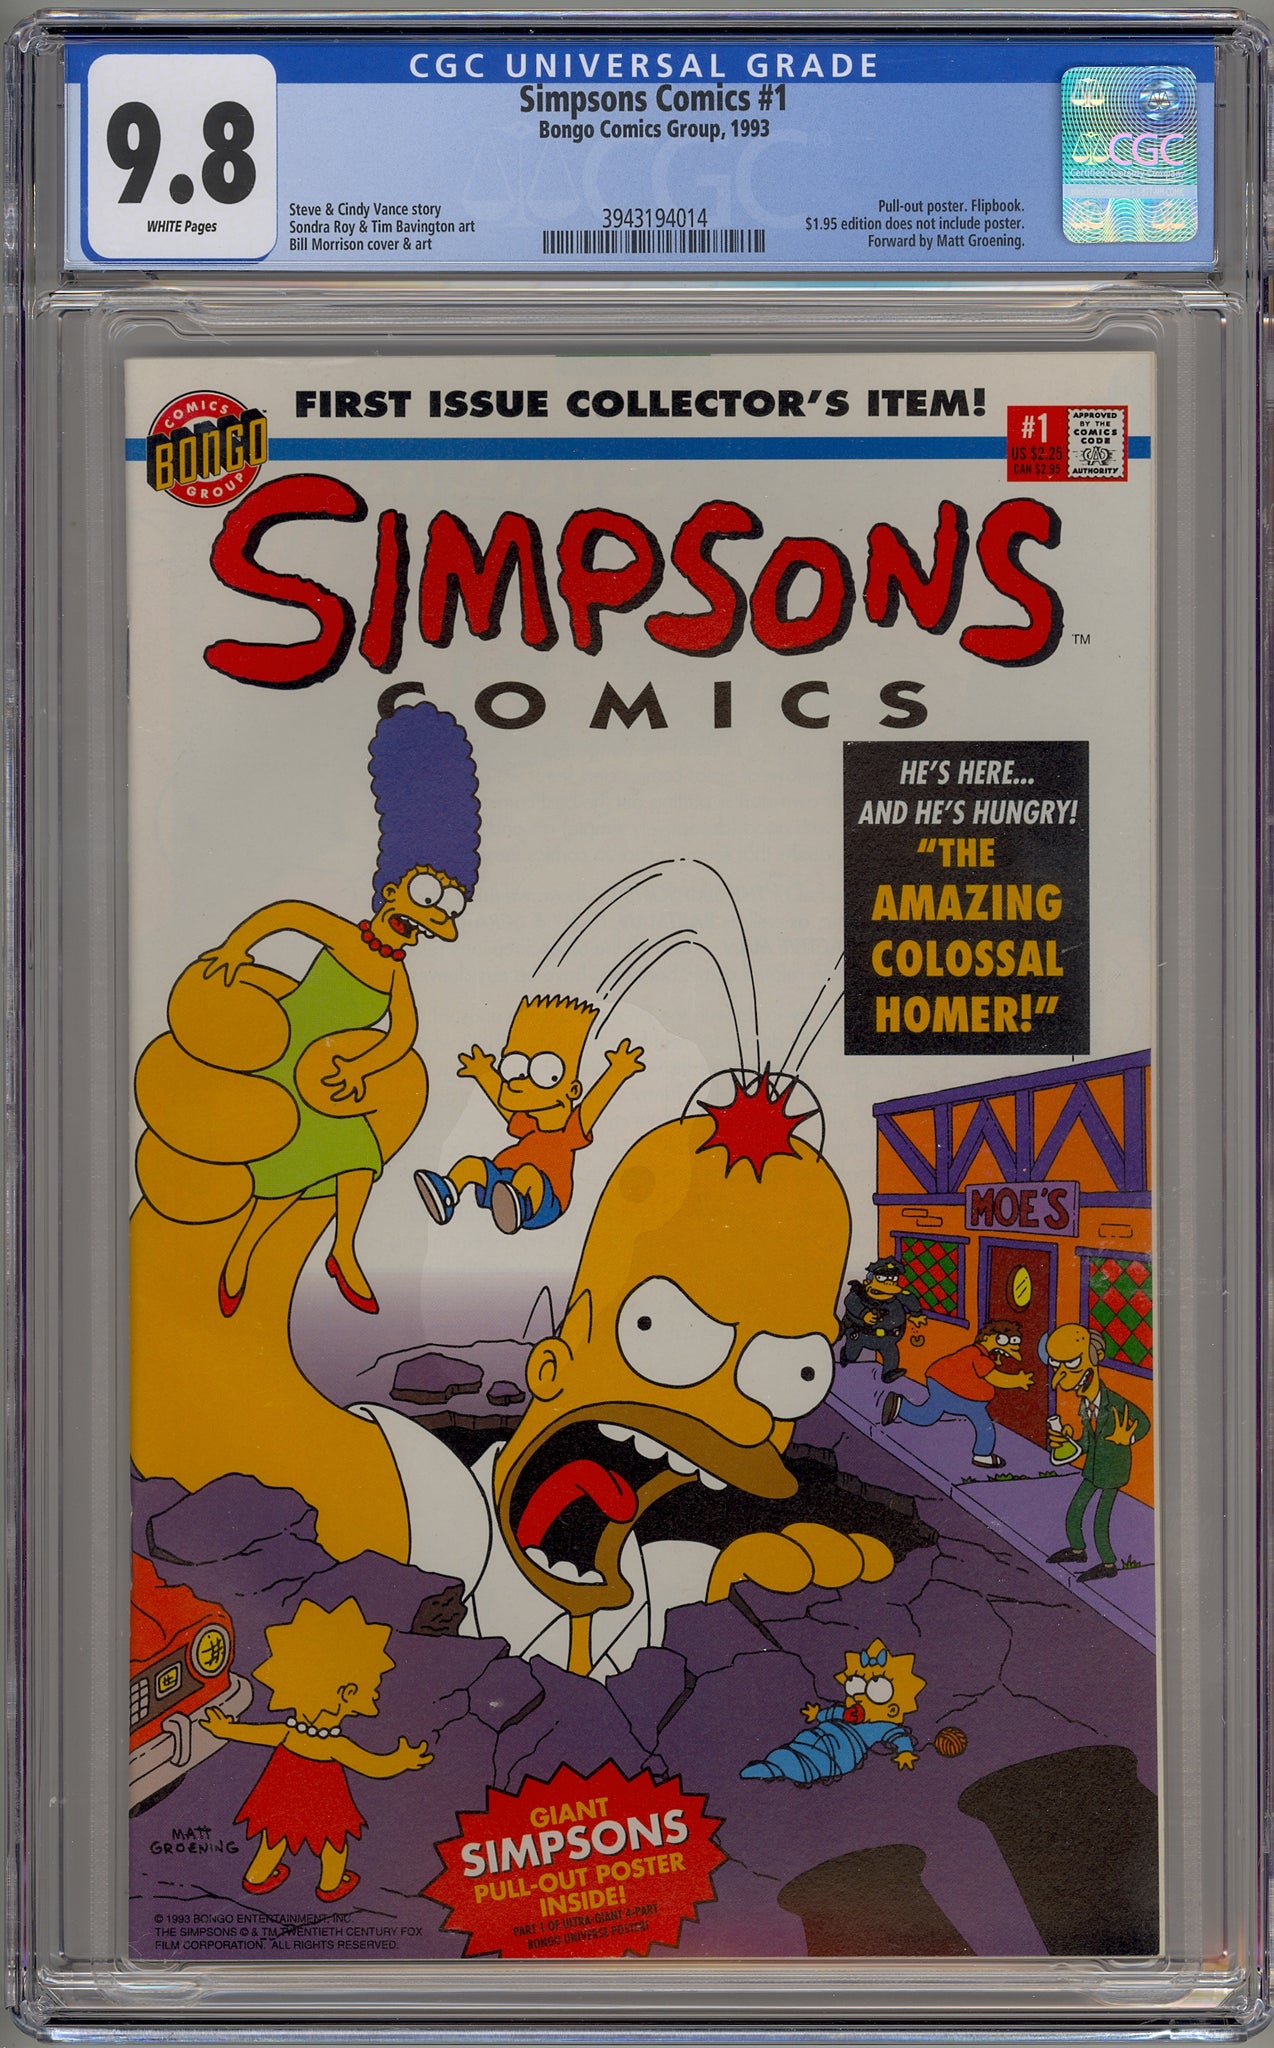 Simpsons Comics #1 (1993) Fantastic Four homage cover